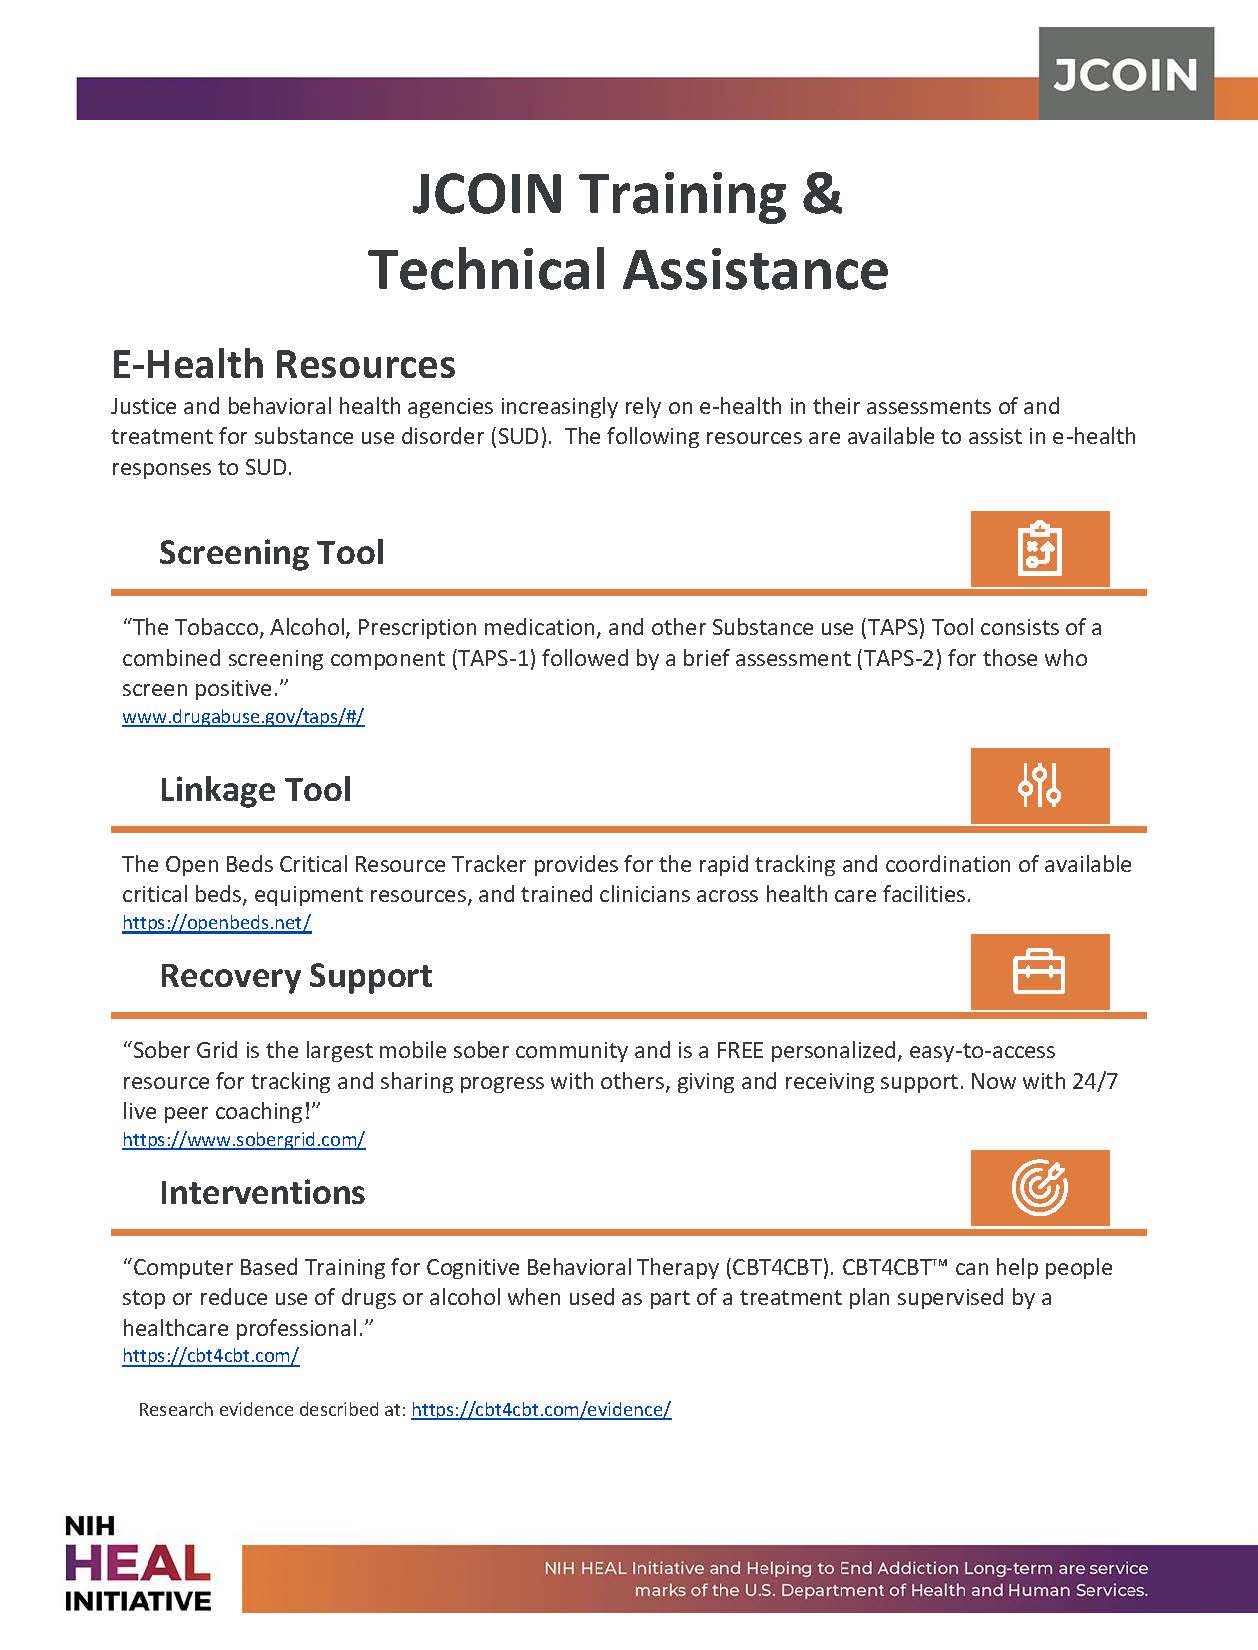 JCOIN TTA PDF screenshot - E-Health Resources